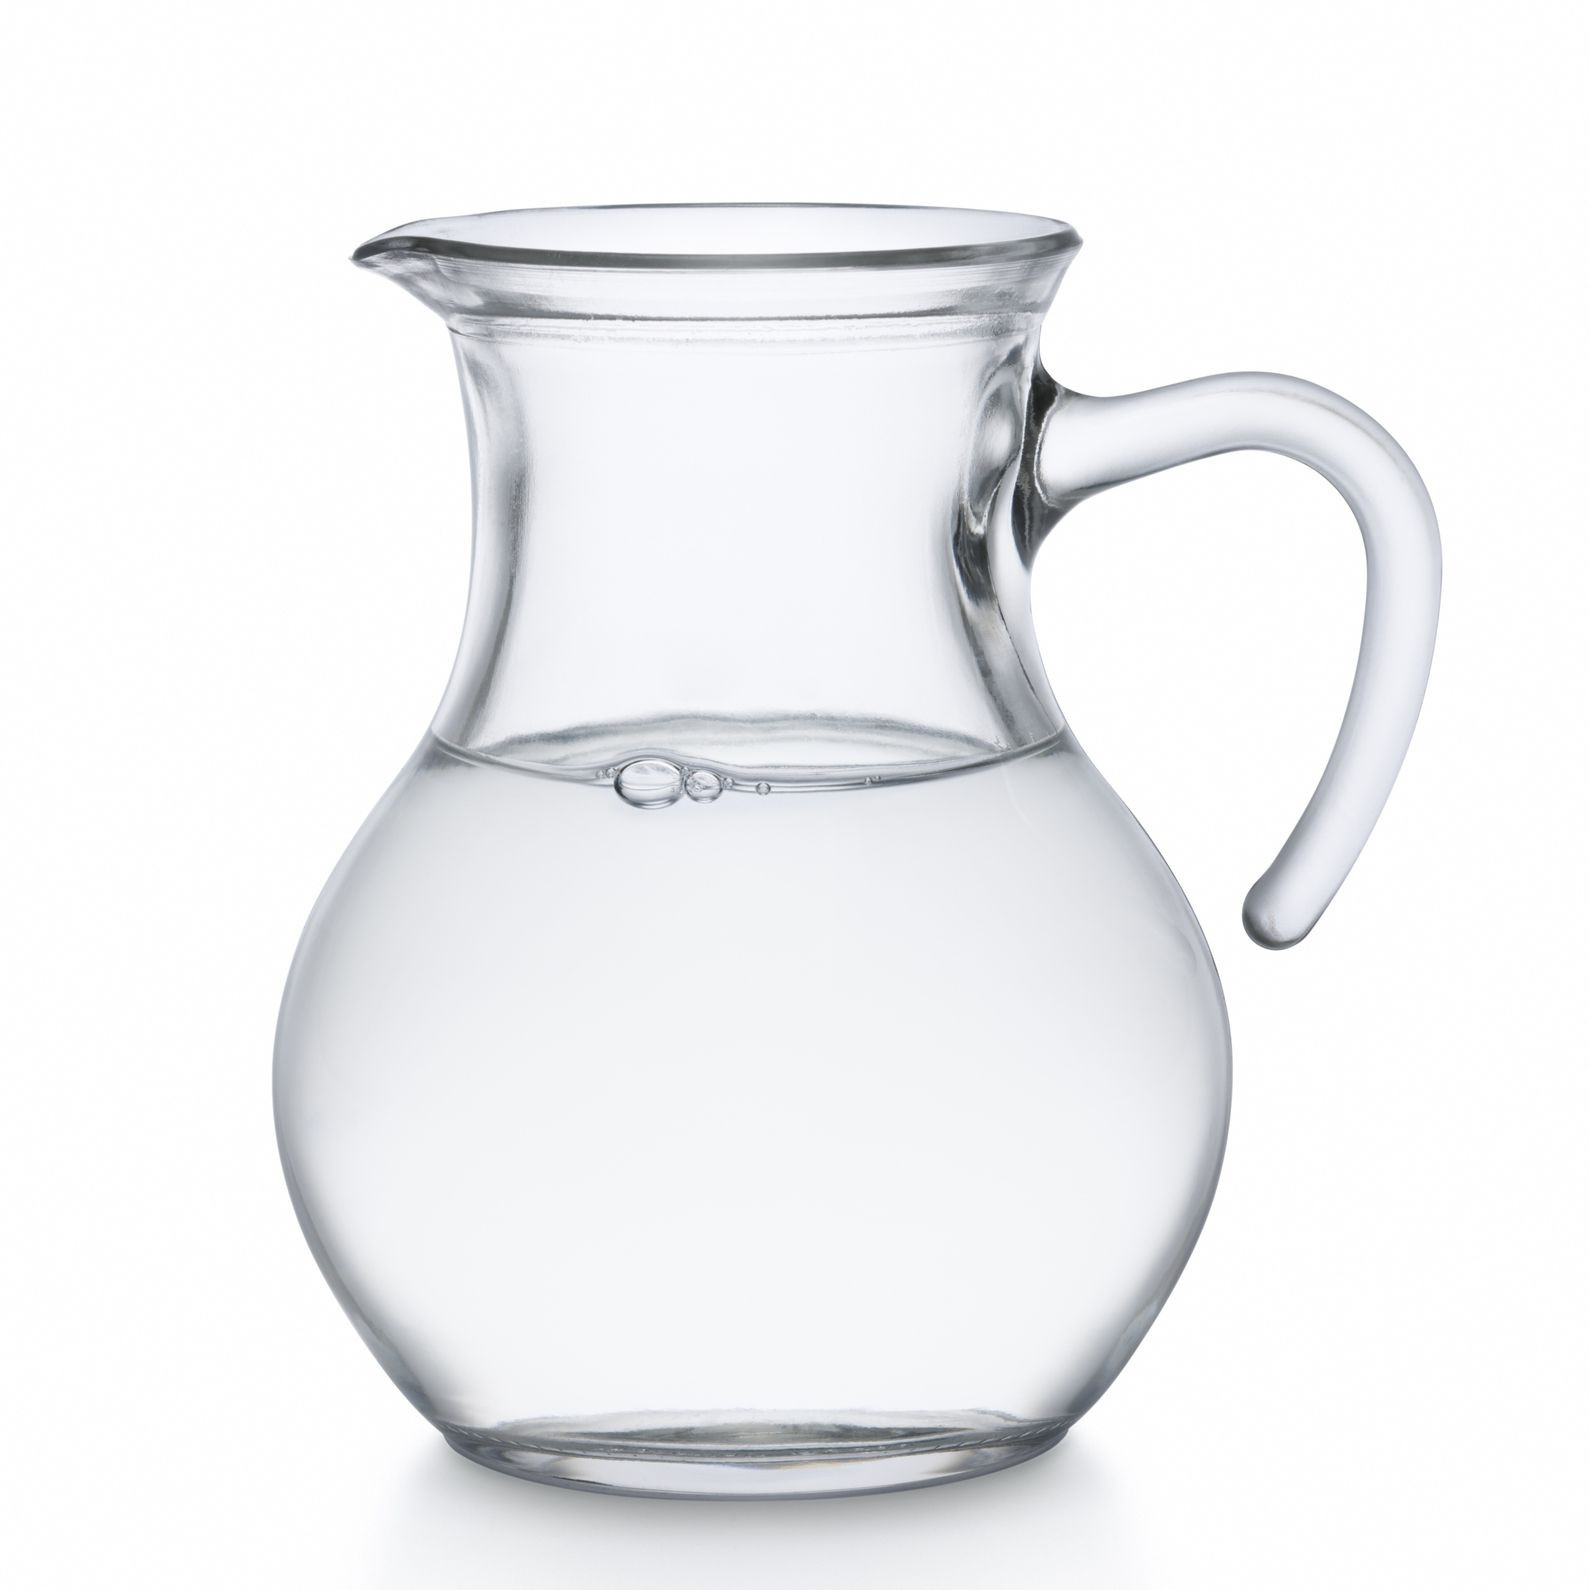 18 Spectacular Large Milk Jug Vase 2024 free download large milk jug vase of a guide to macrobiotic drinks and diets regarding ansonsaw getty images